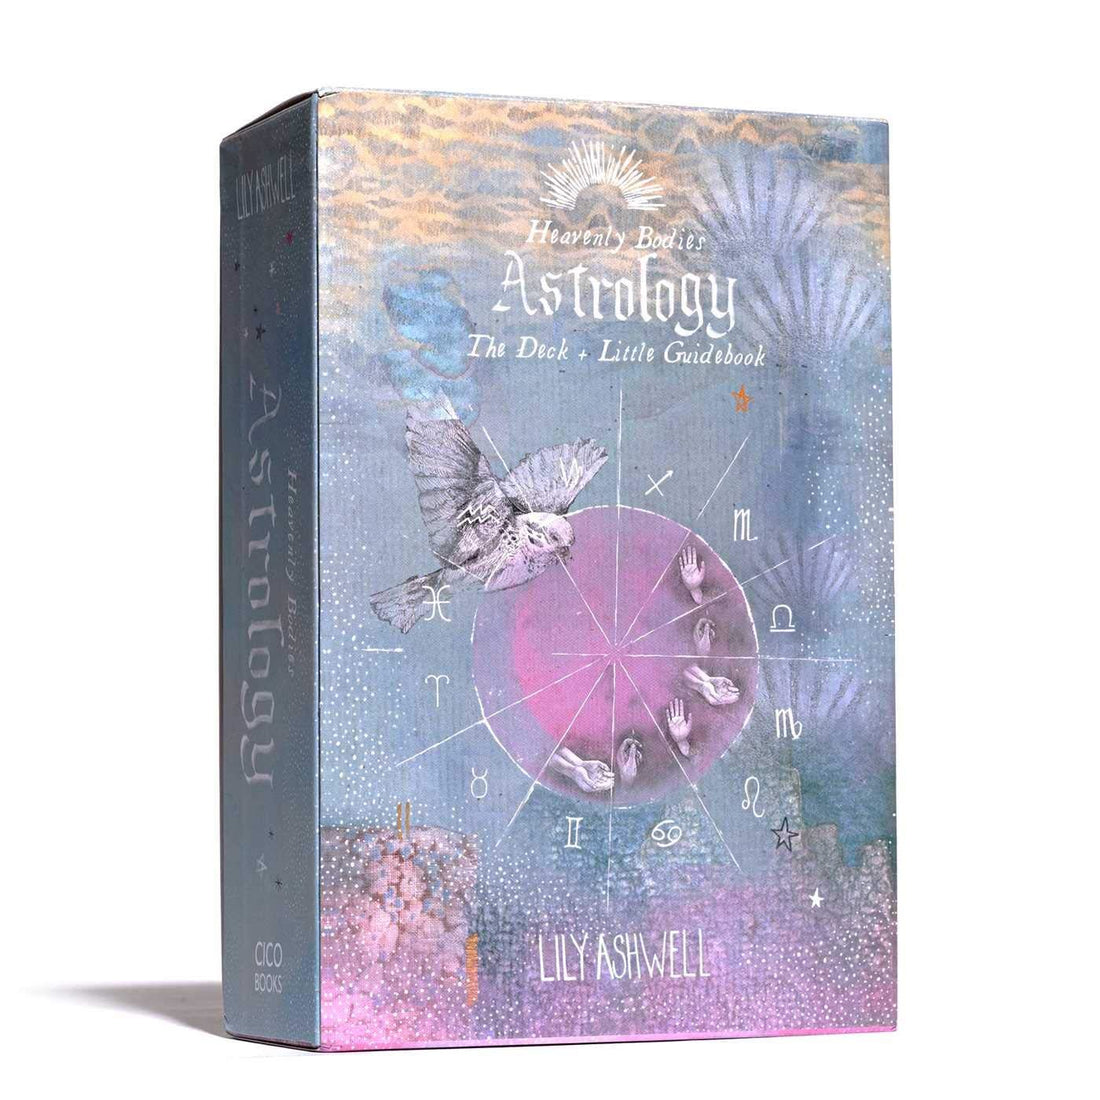 Heavenly Bodies Astrology (Deluxe Set)